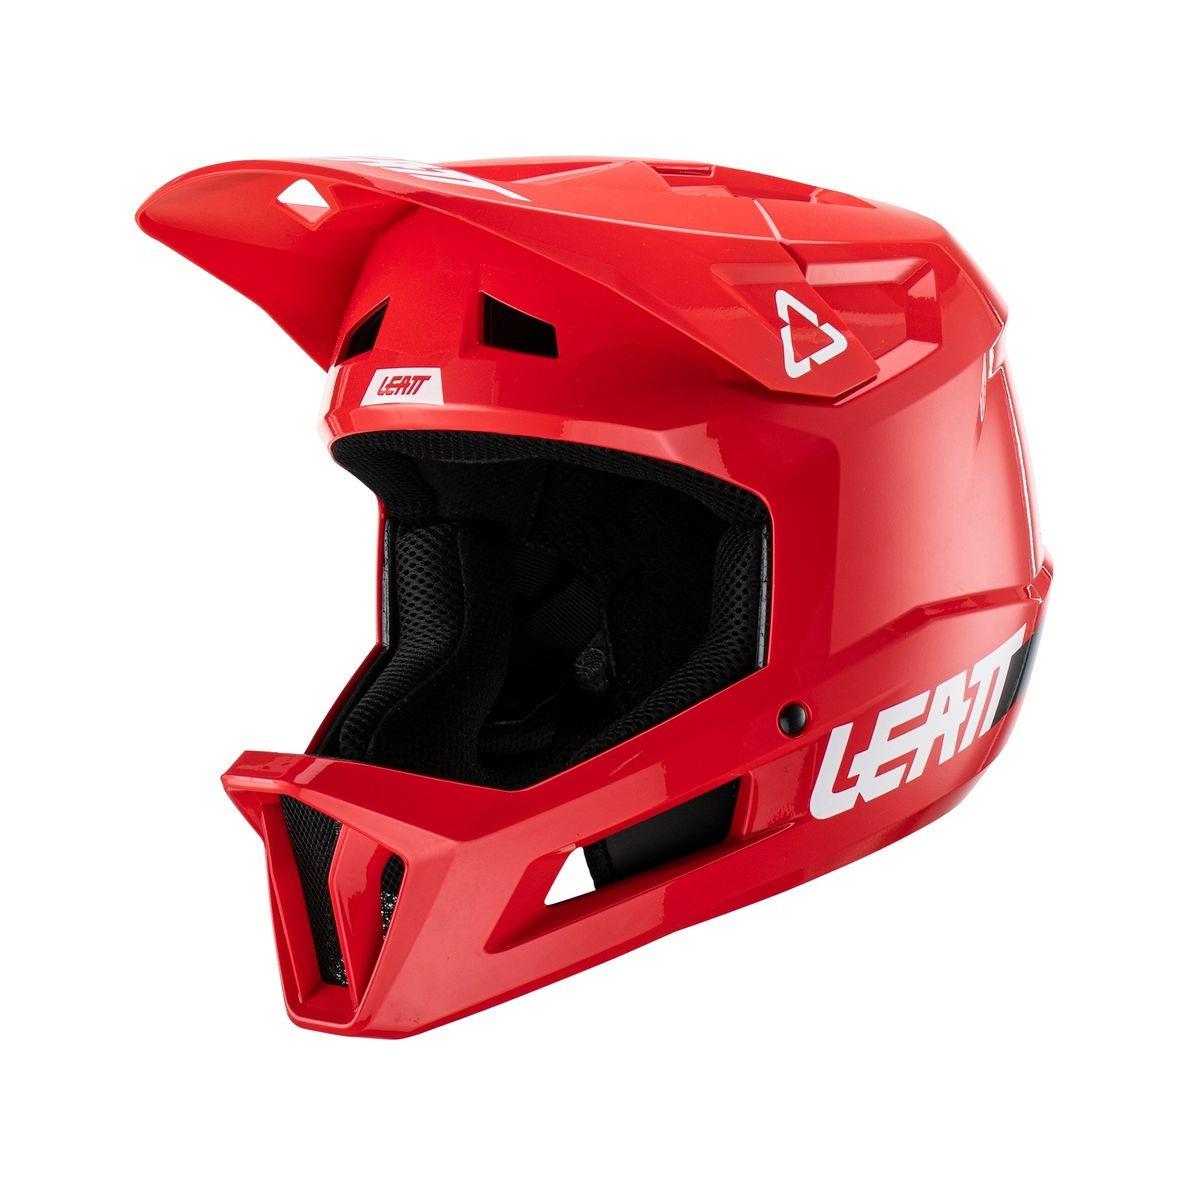 Gravity 1.0 Kids MTB Fullface Helmet Red Size XXS (51-52cm)